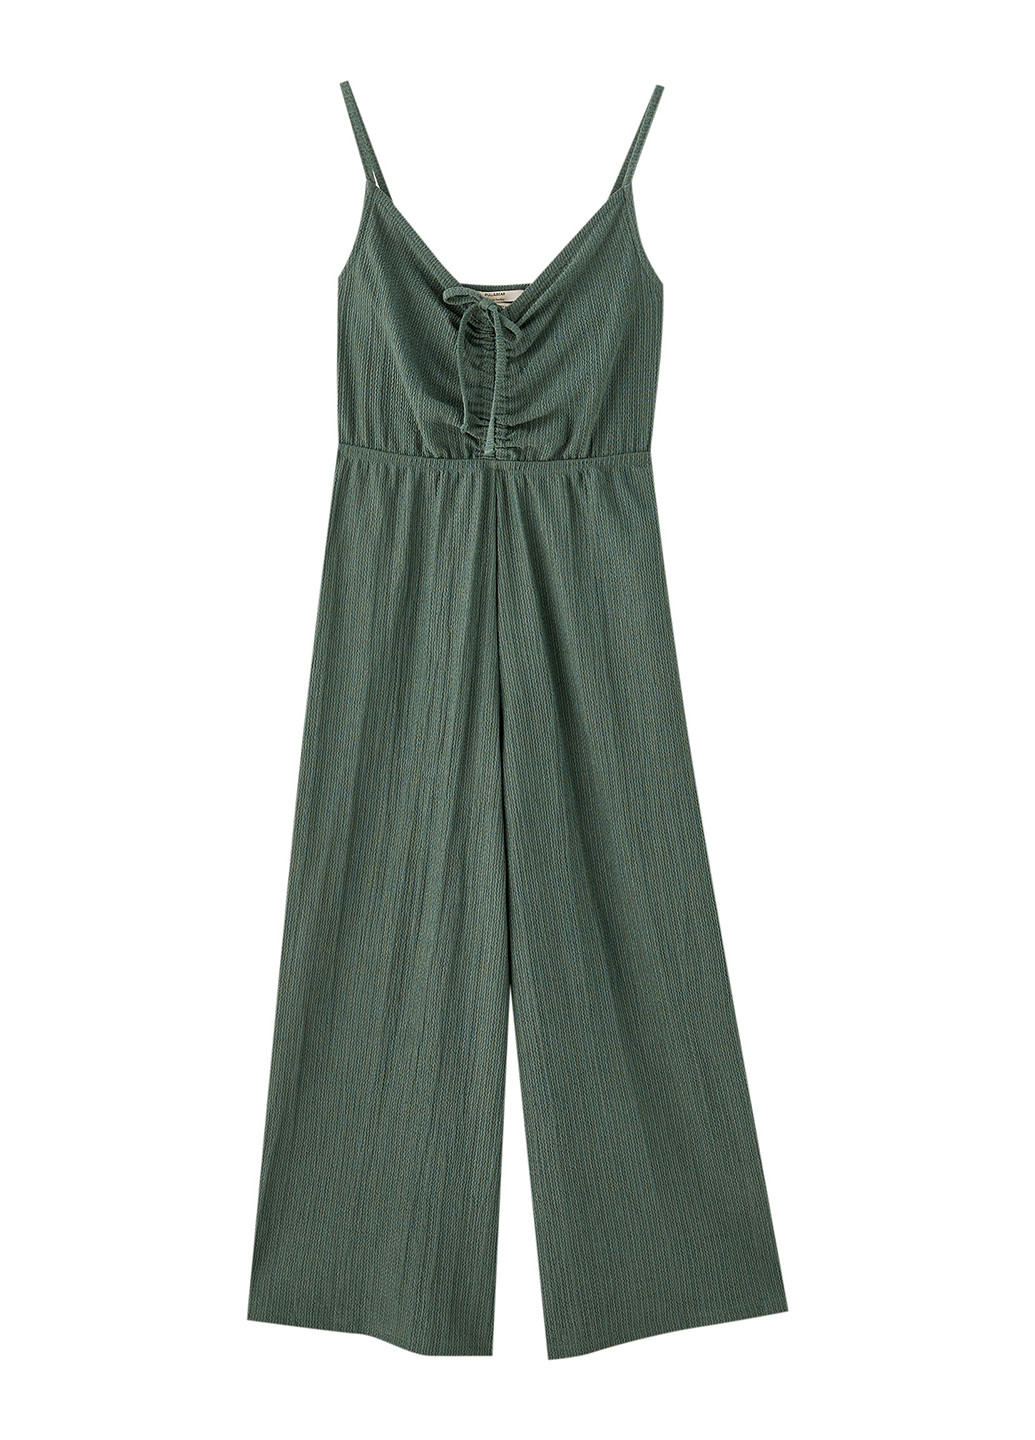 Комбинезон Pull & Bear комбинезон-брюки однотонный темно-зелёный кэжуал полиэстер